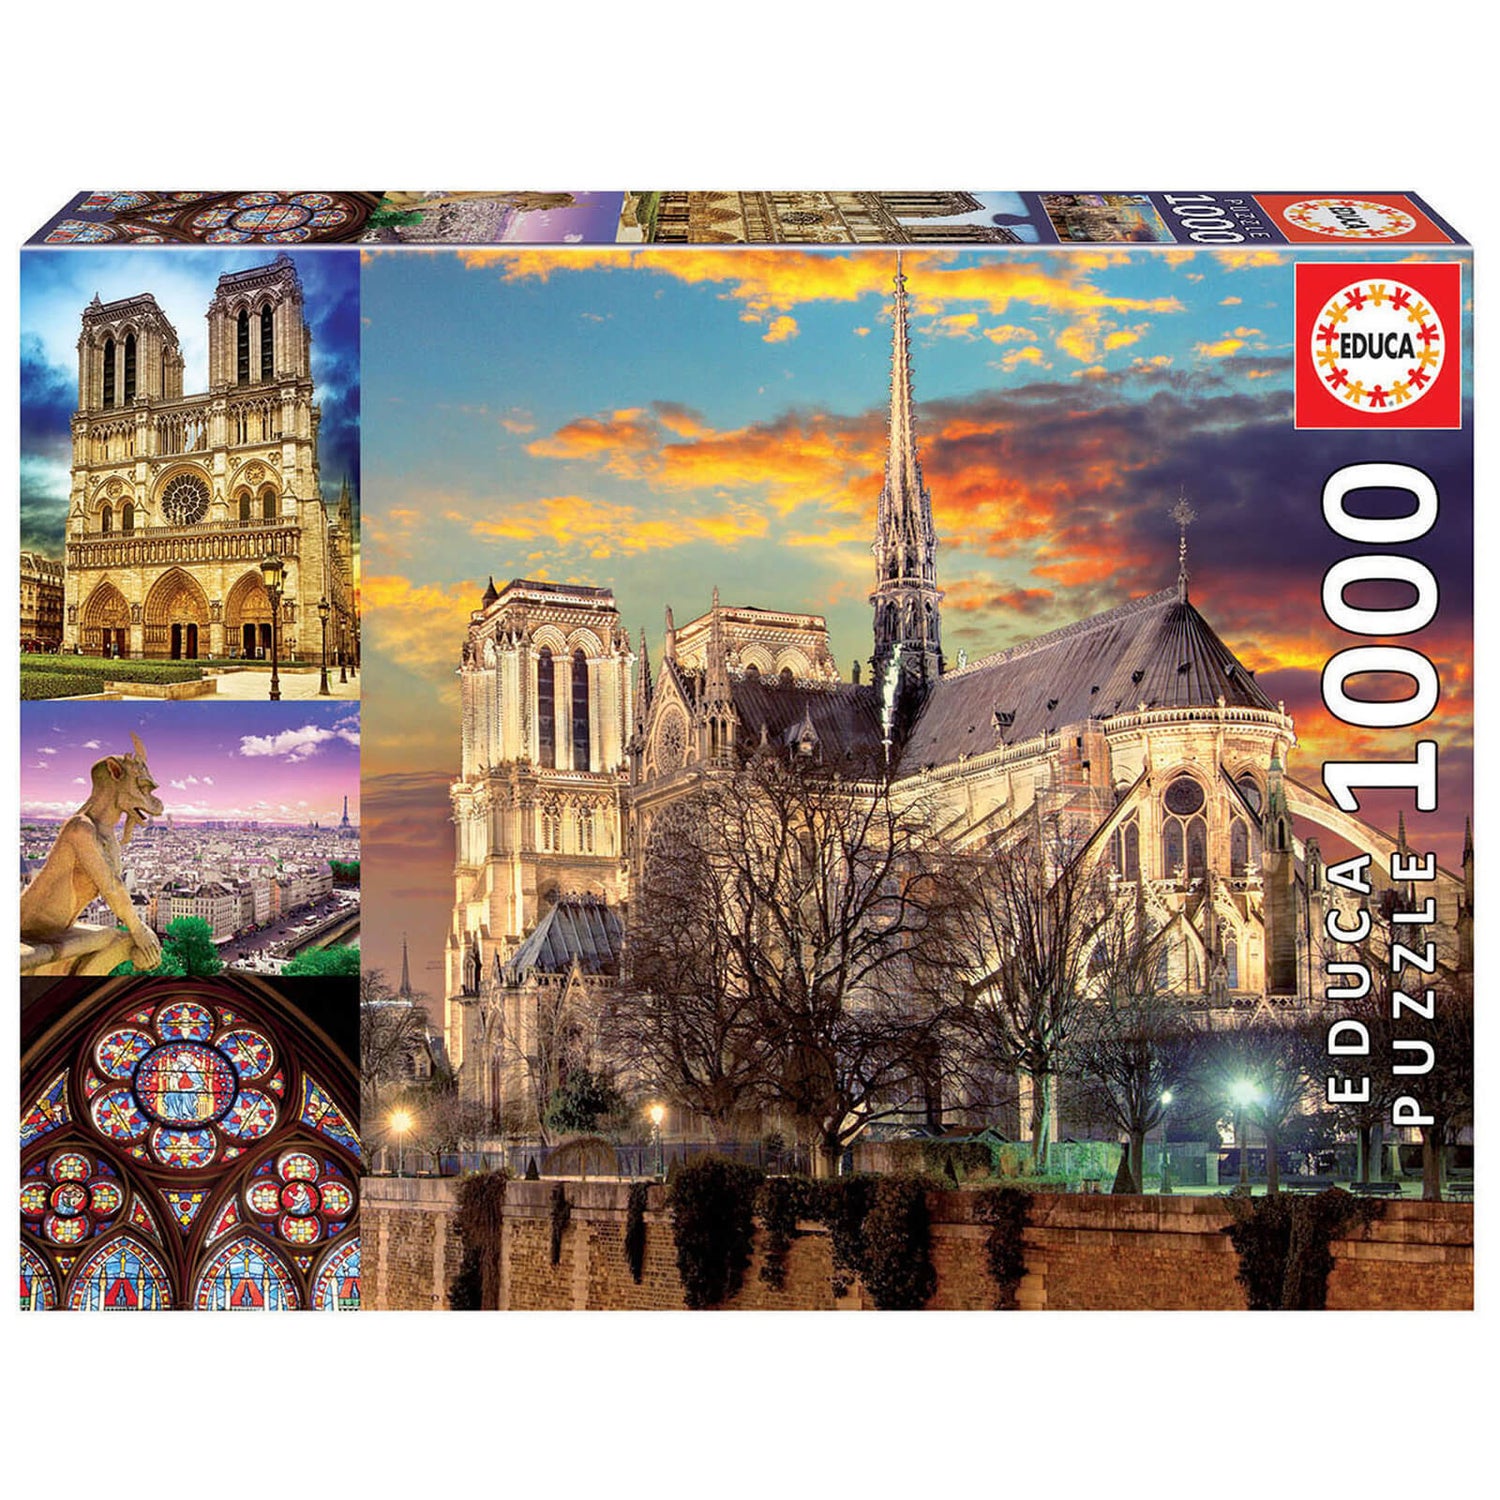 Notre Dame Collage Jigsaw Puzzle (1000 Pieces)